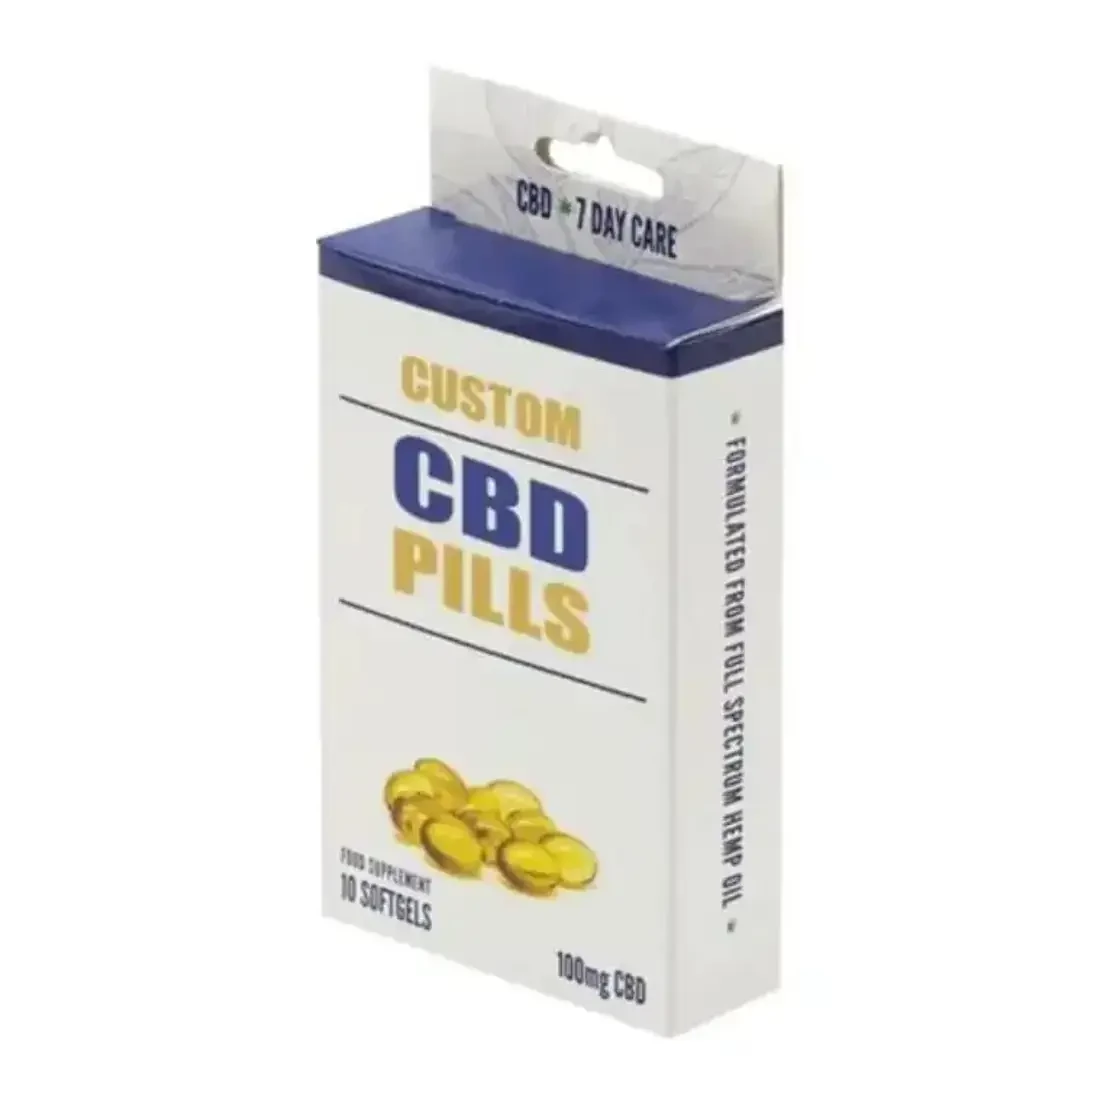 custom-design-cbd-pills-packaging-boxes